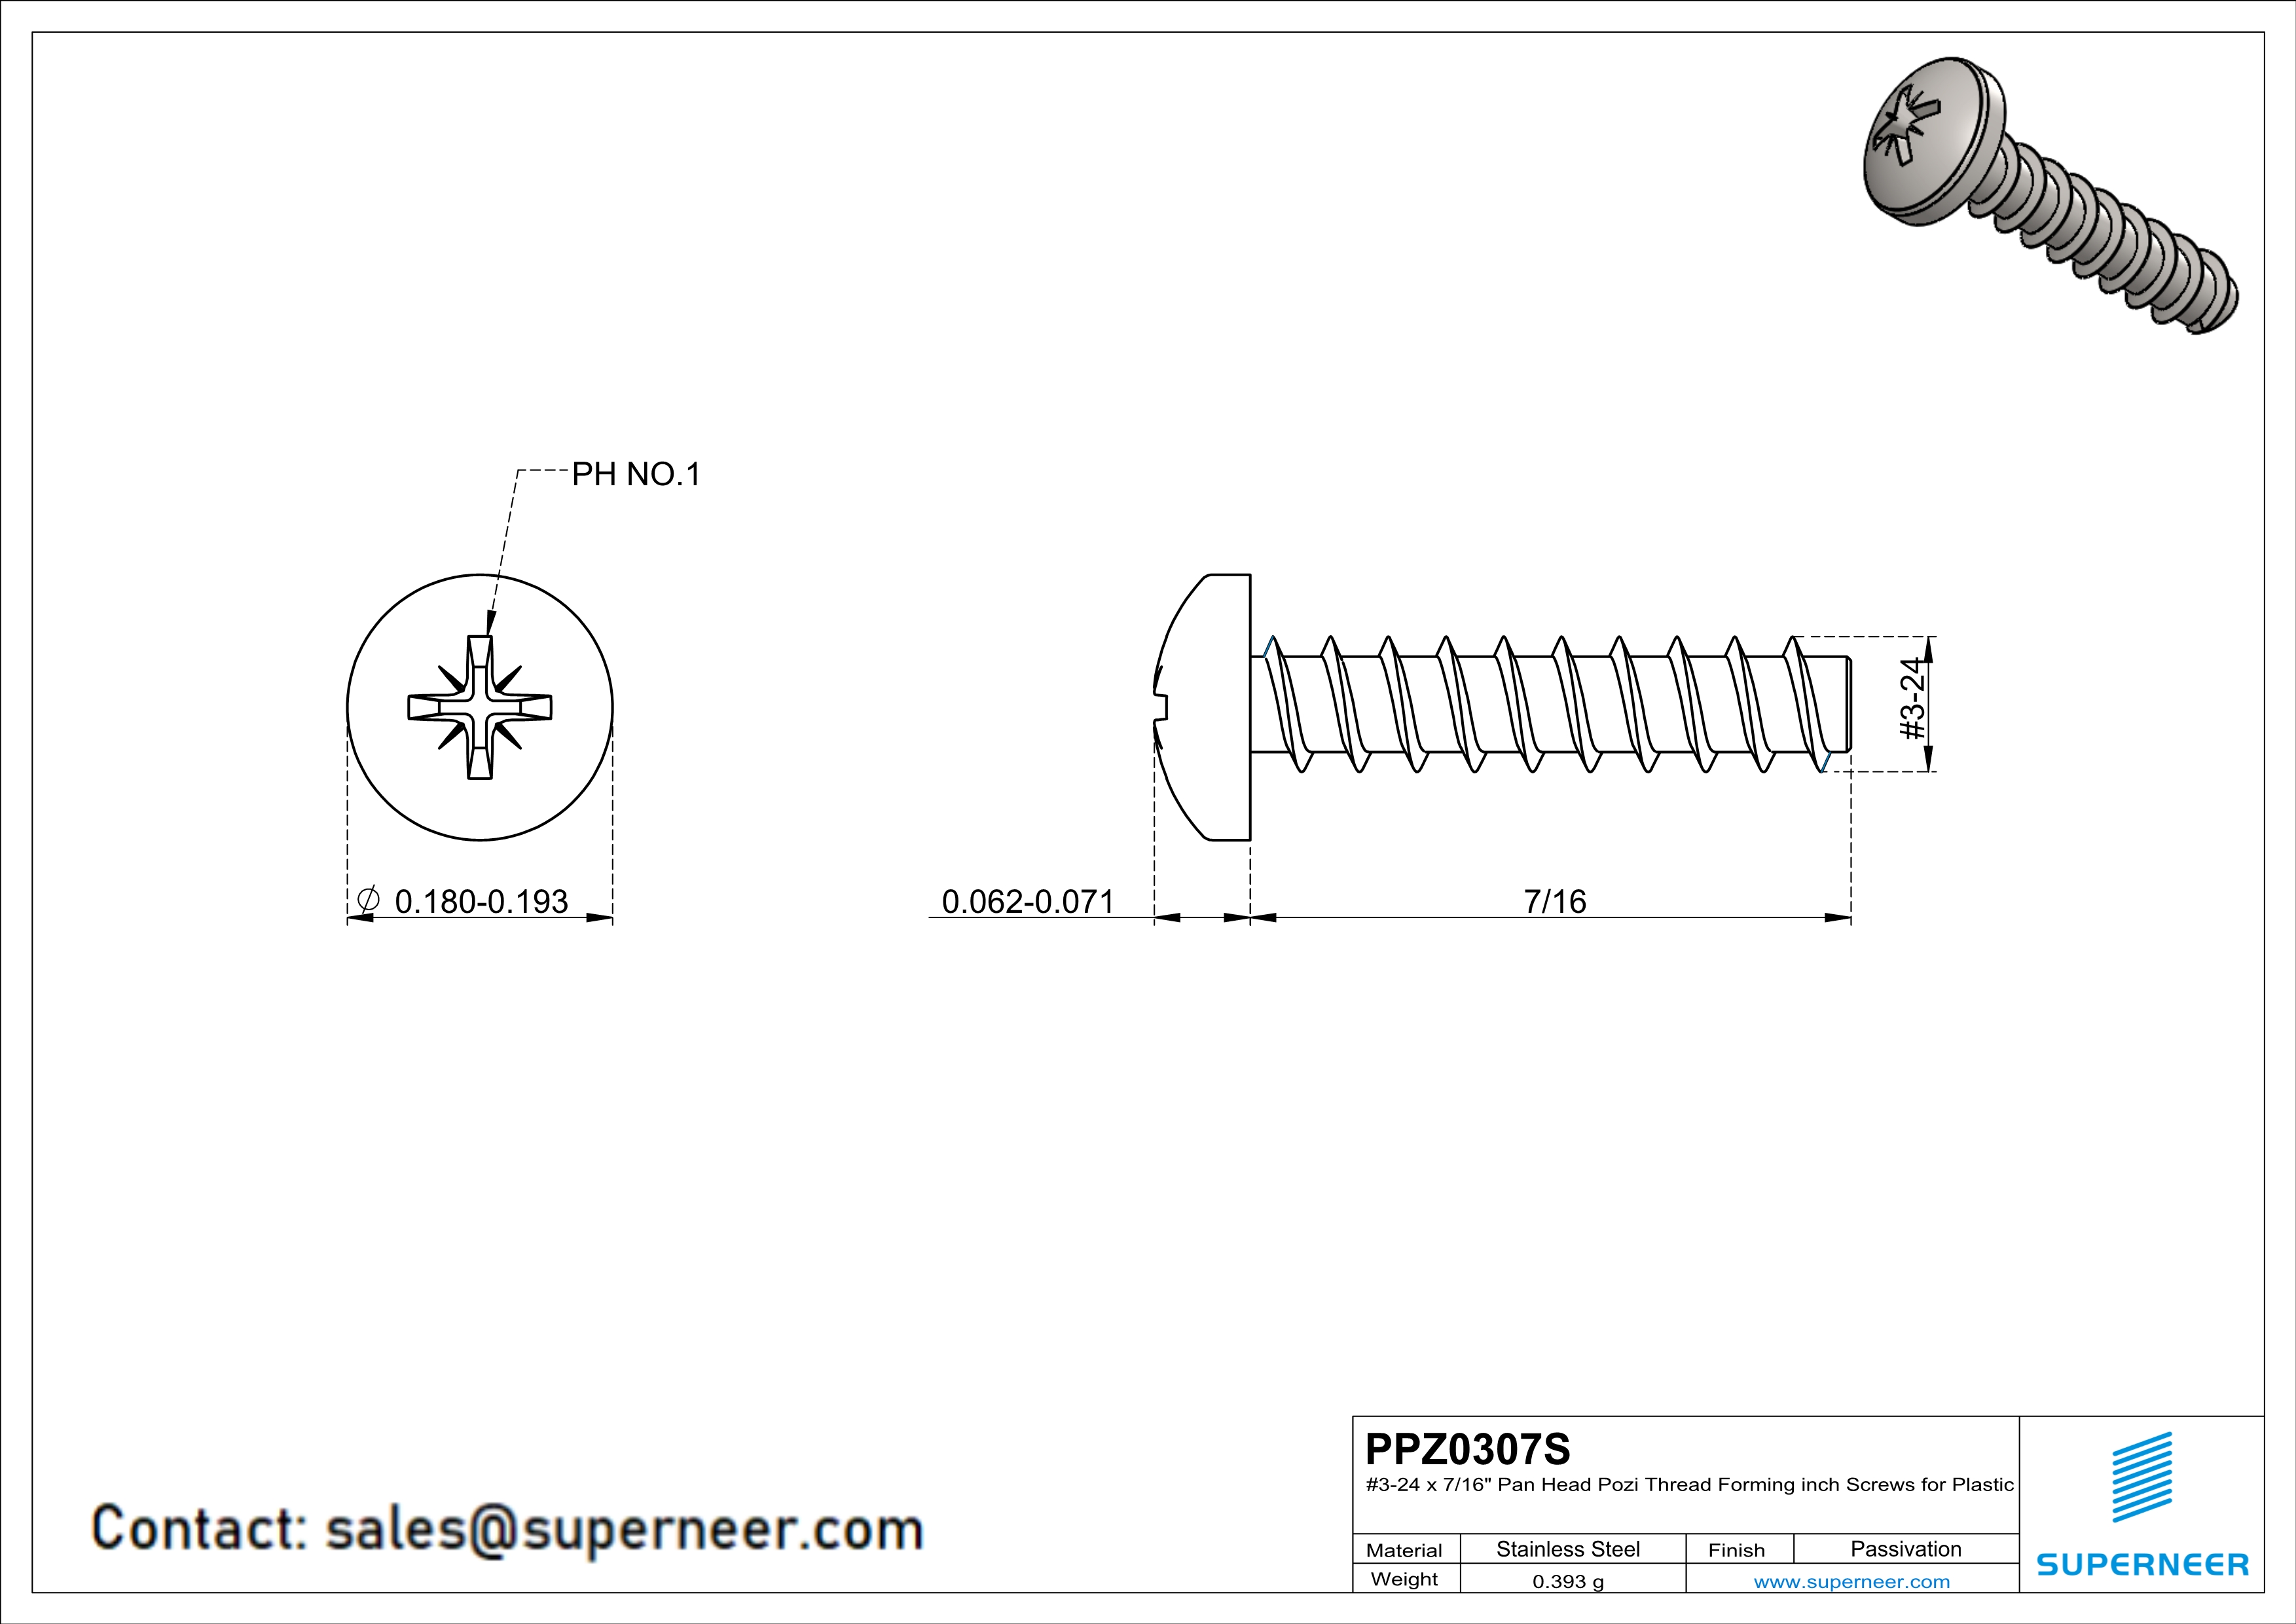 3 × 7/16" Pan Head Pozi Thread Forming inch Screws for Plastic  SUS304 Stainless Steel Inox